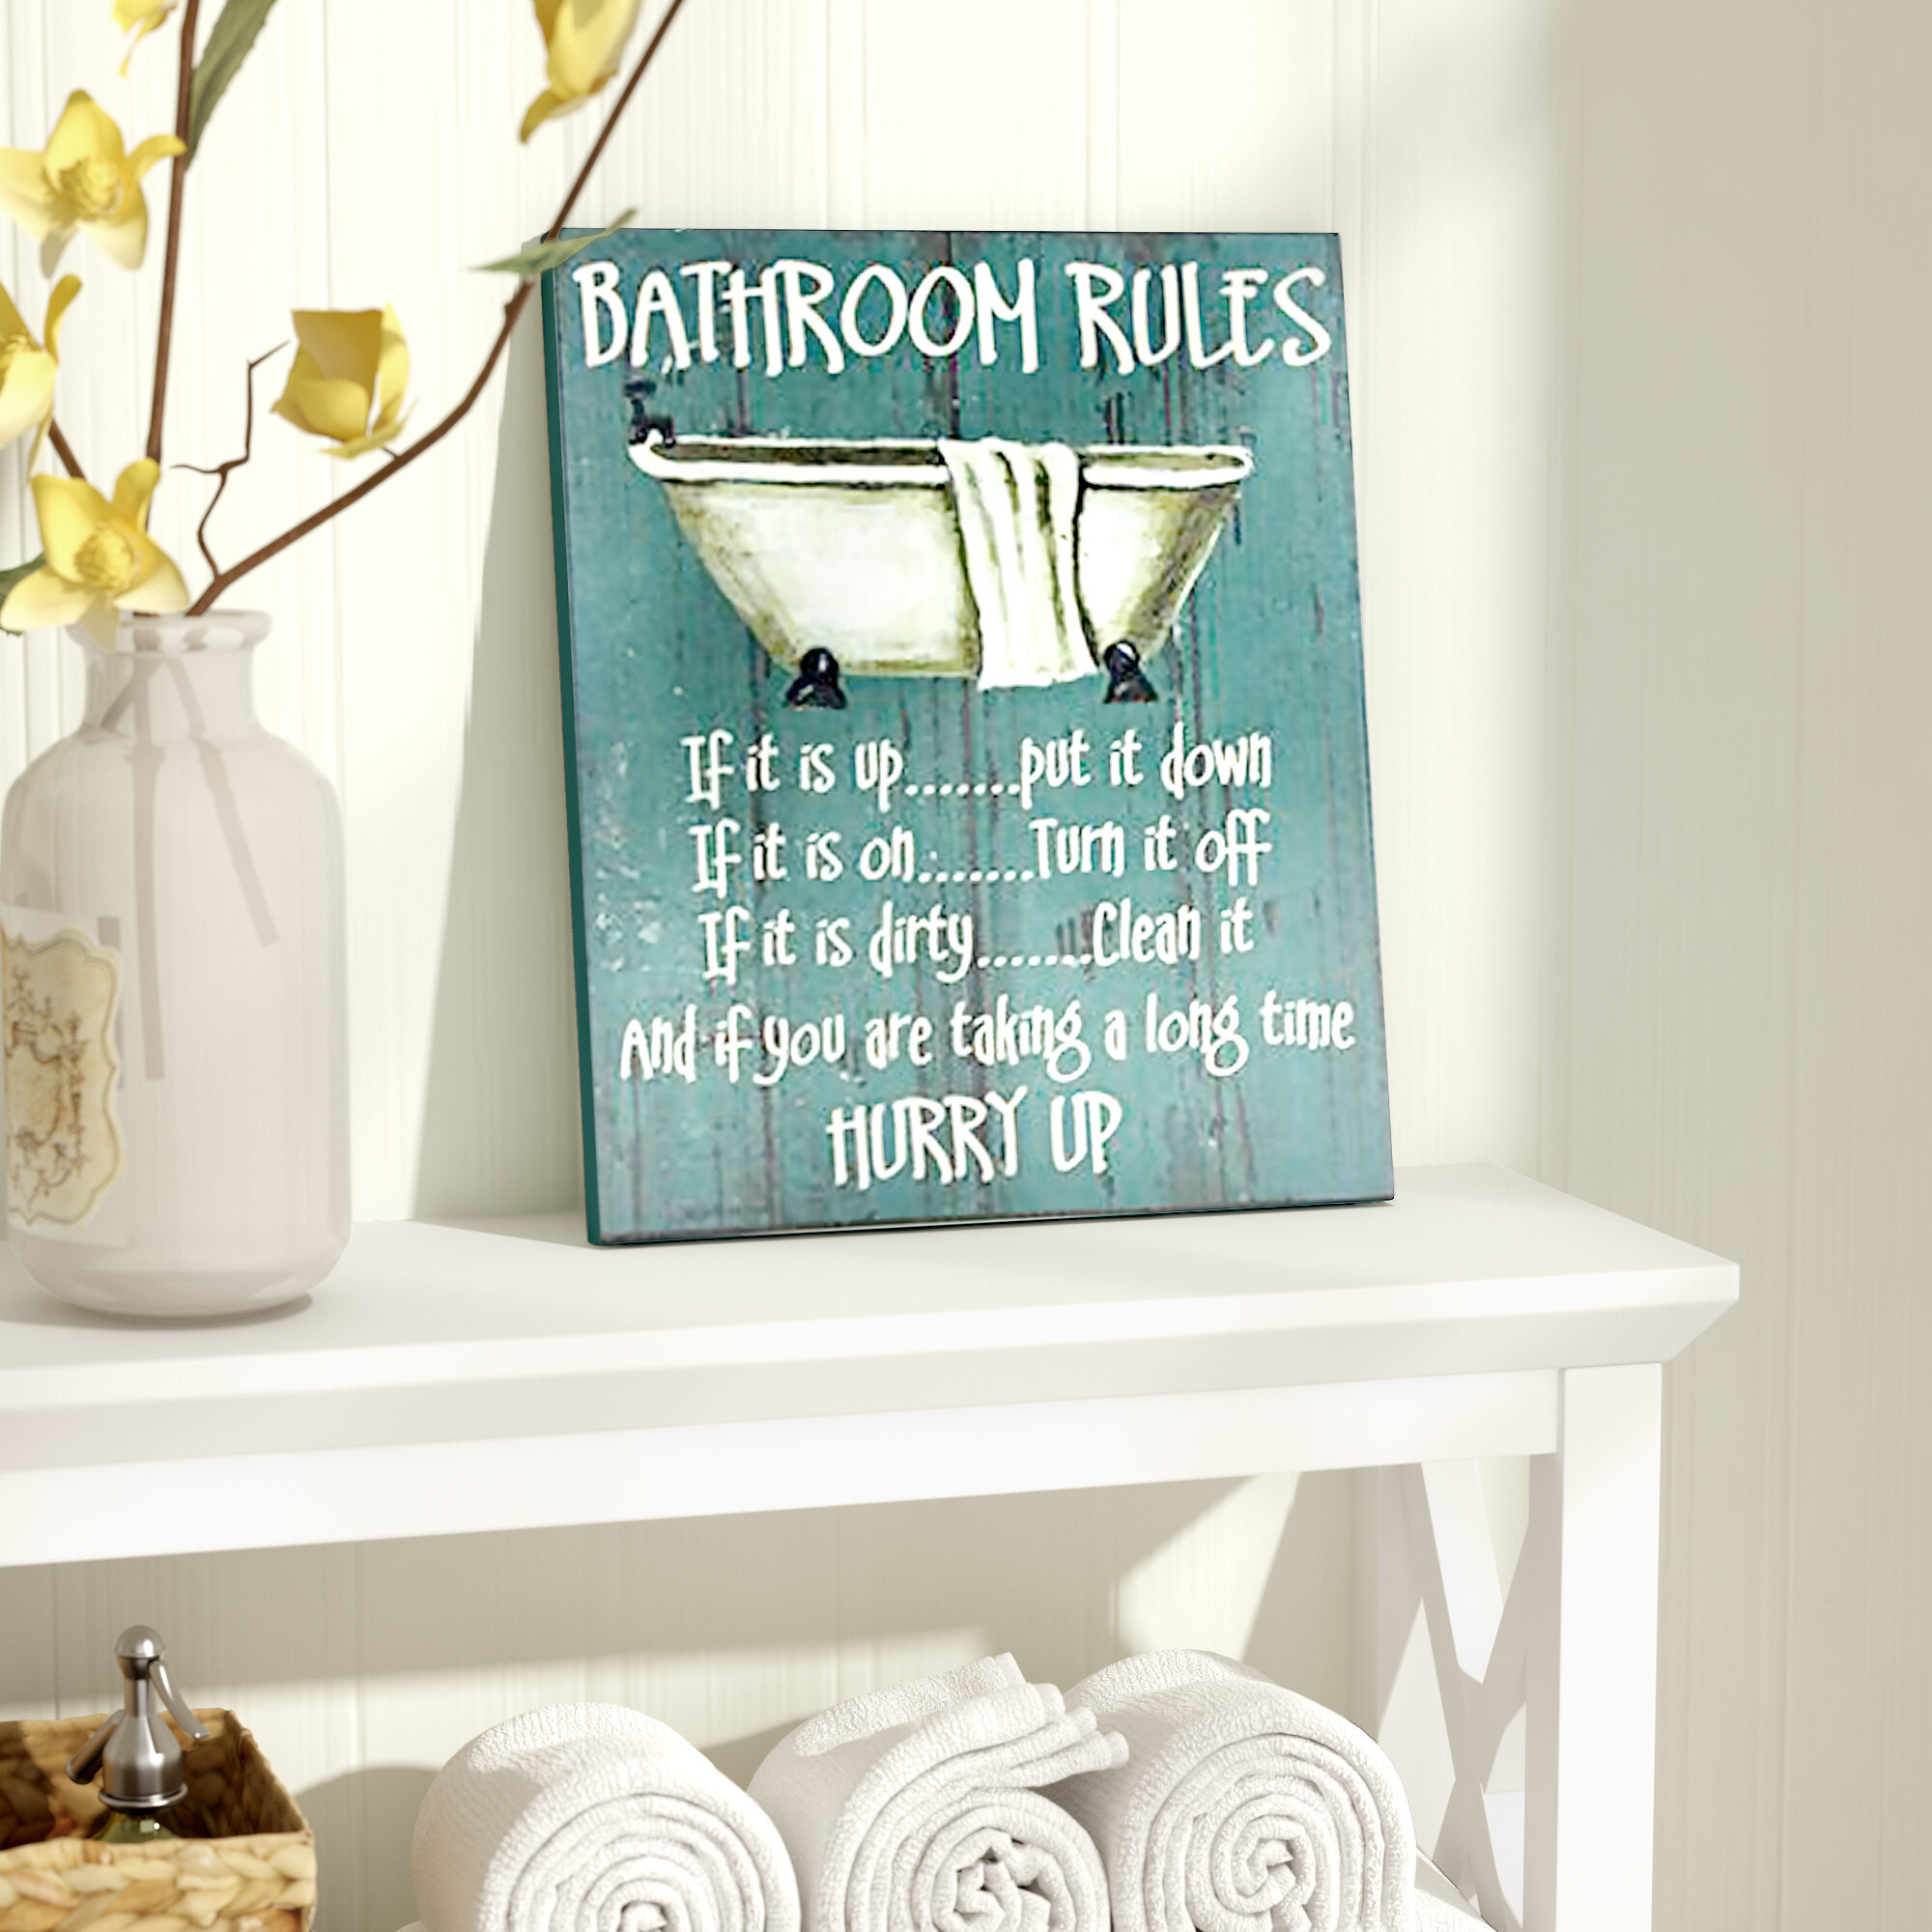 Bathroom Wall Signs
 August Grove Bathroom Rules Textual Art & Reviews